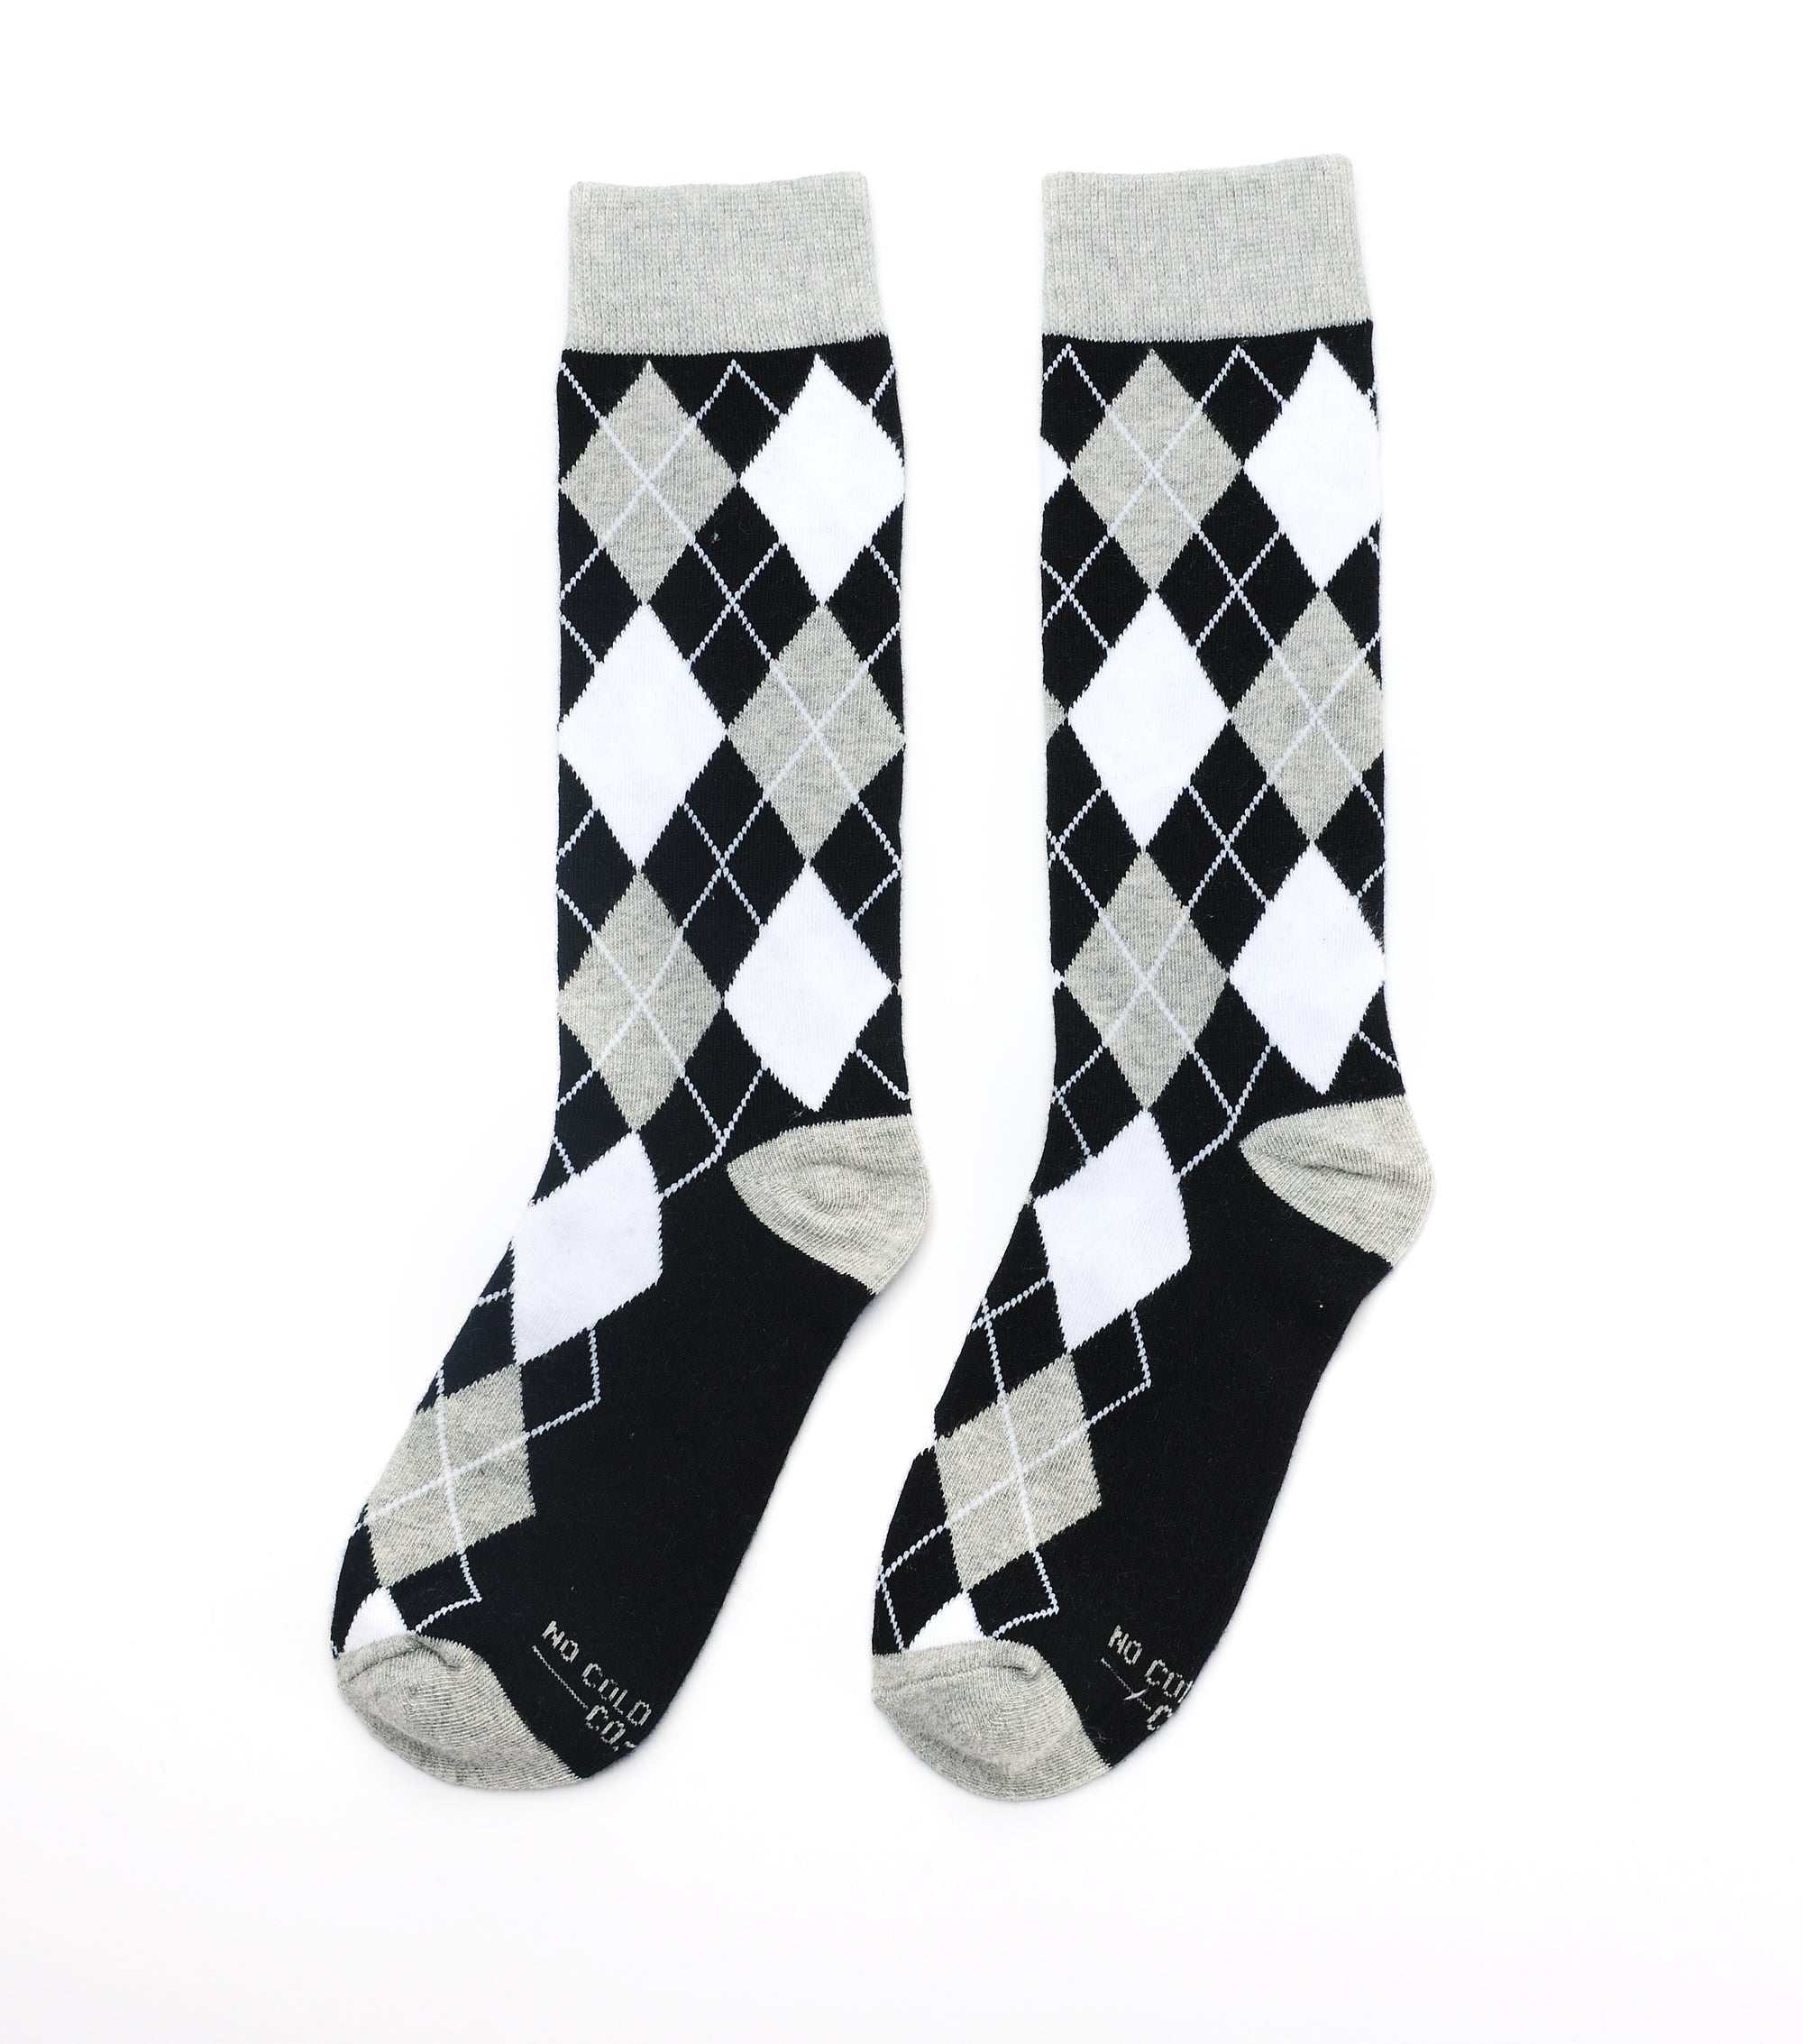 Black, White, and Grey Argyle Groomsmen Socks | No Cold Feet Co.